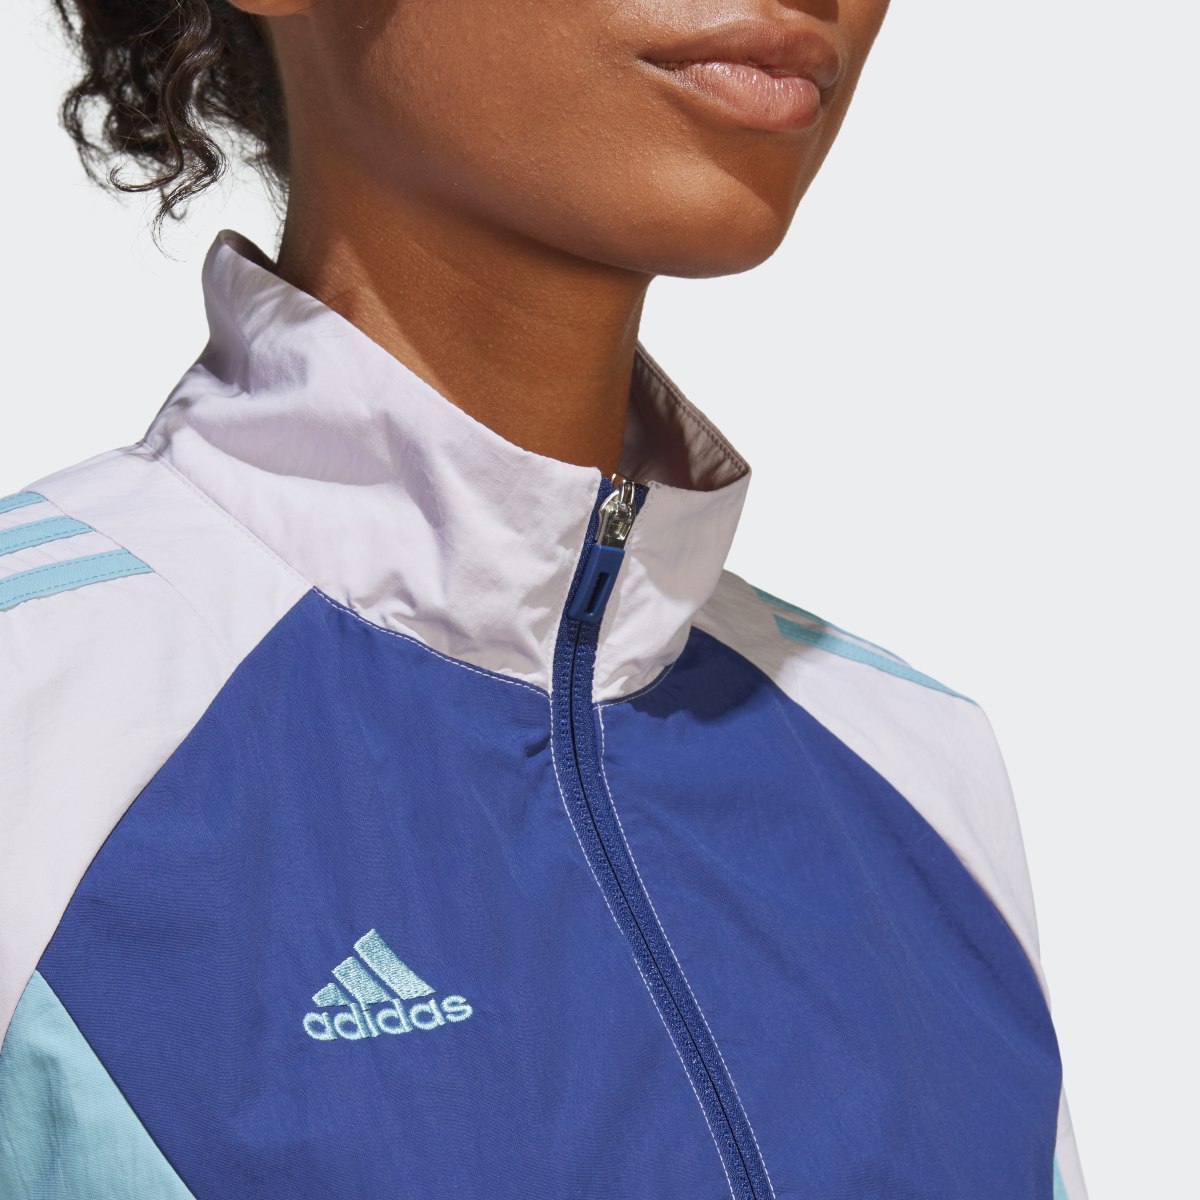 Adidas Tiro Woven Jacket. 7